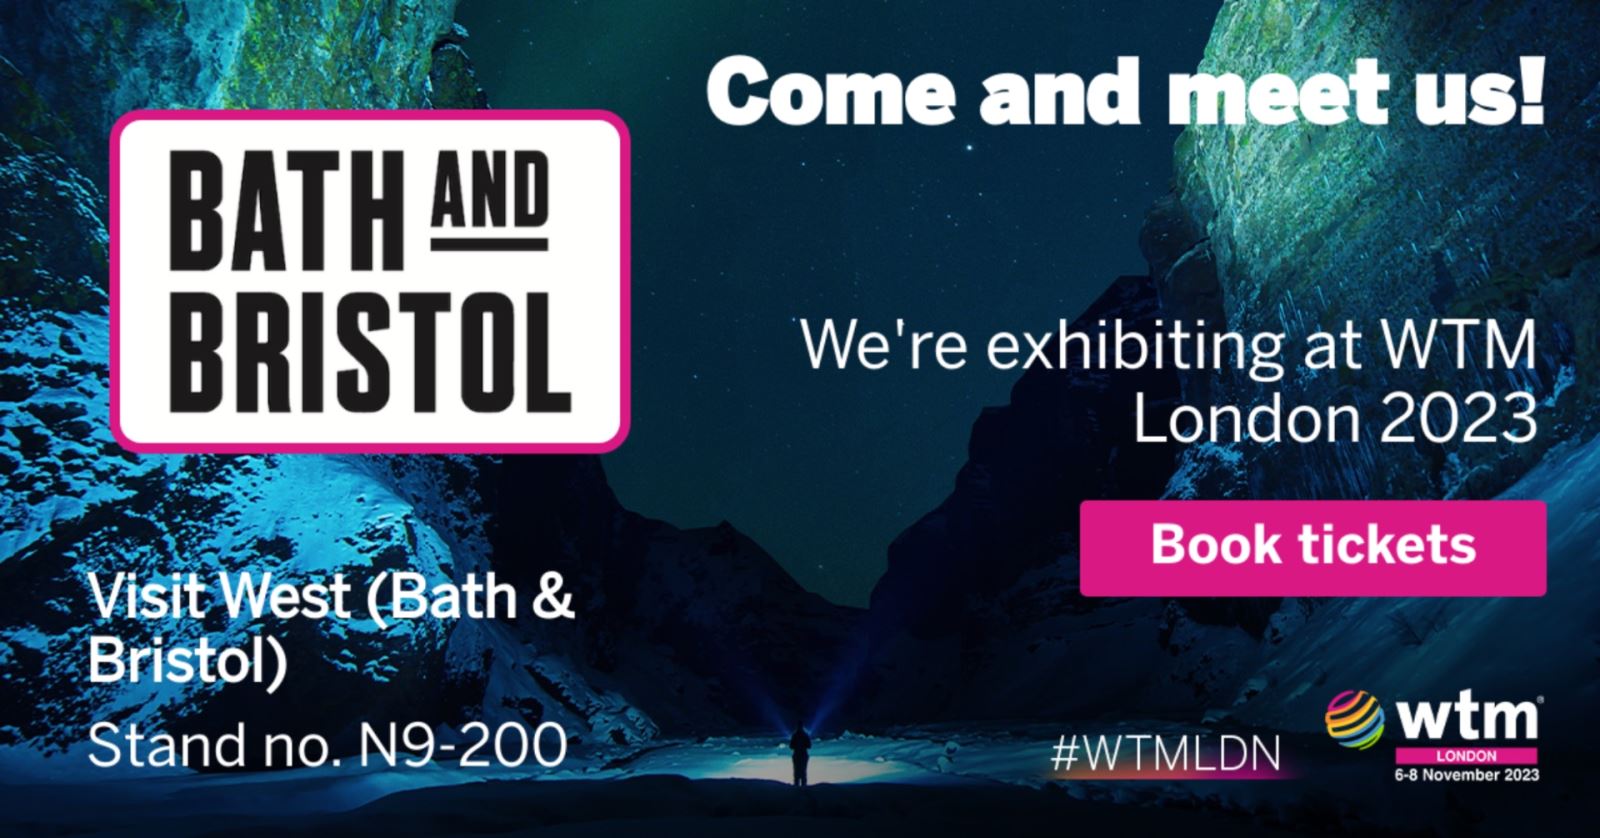 Meet with Bath & Bristol at WTM 2023